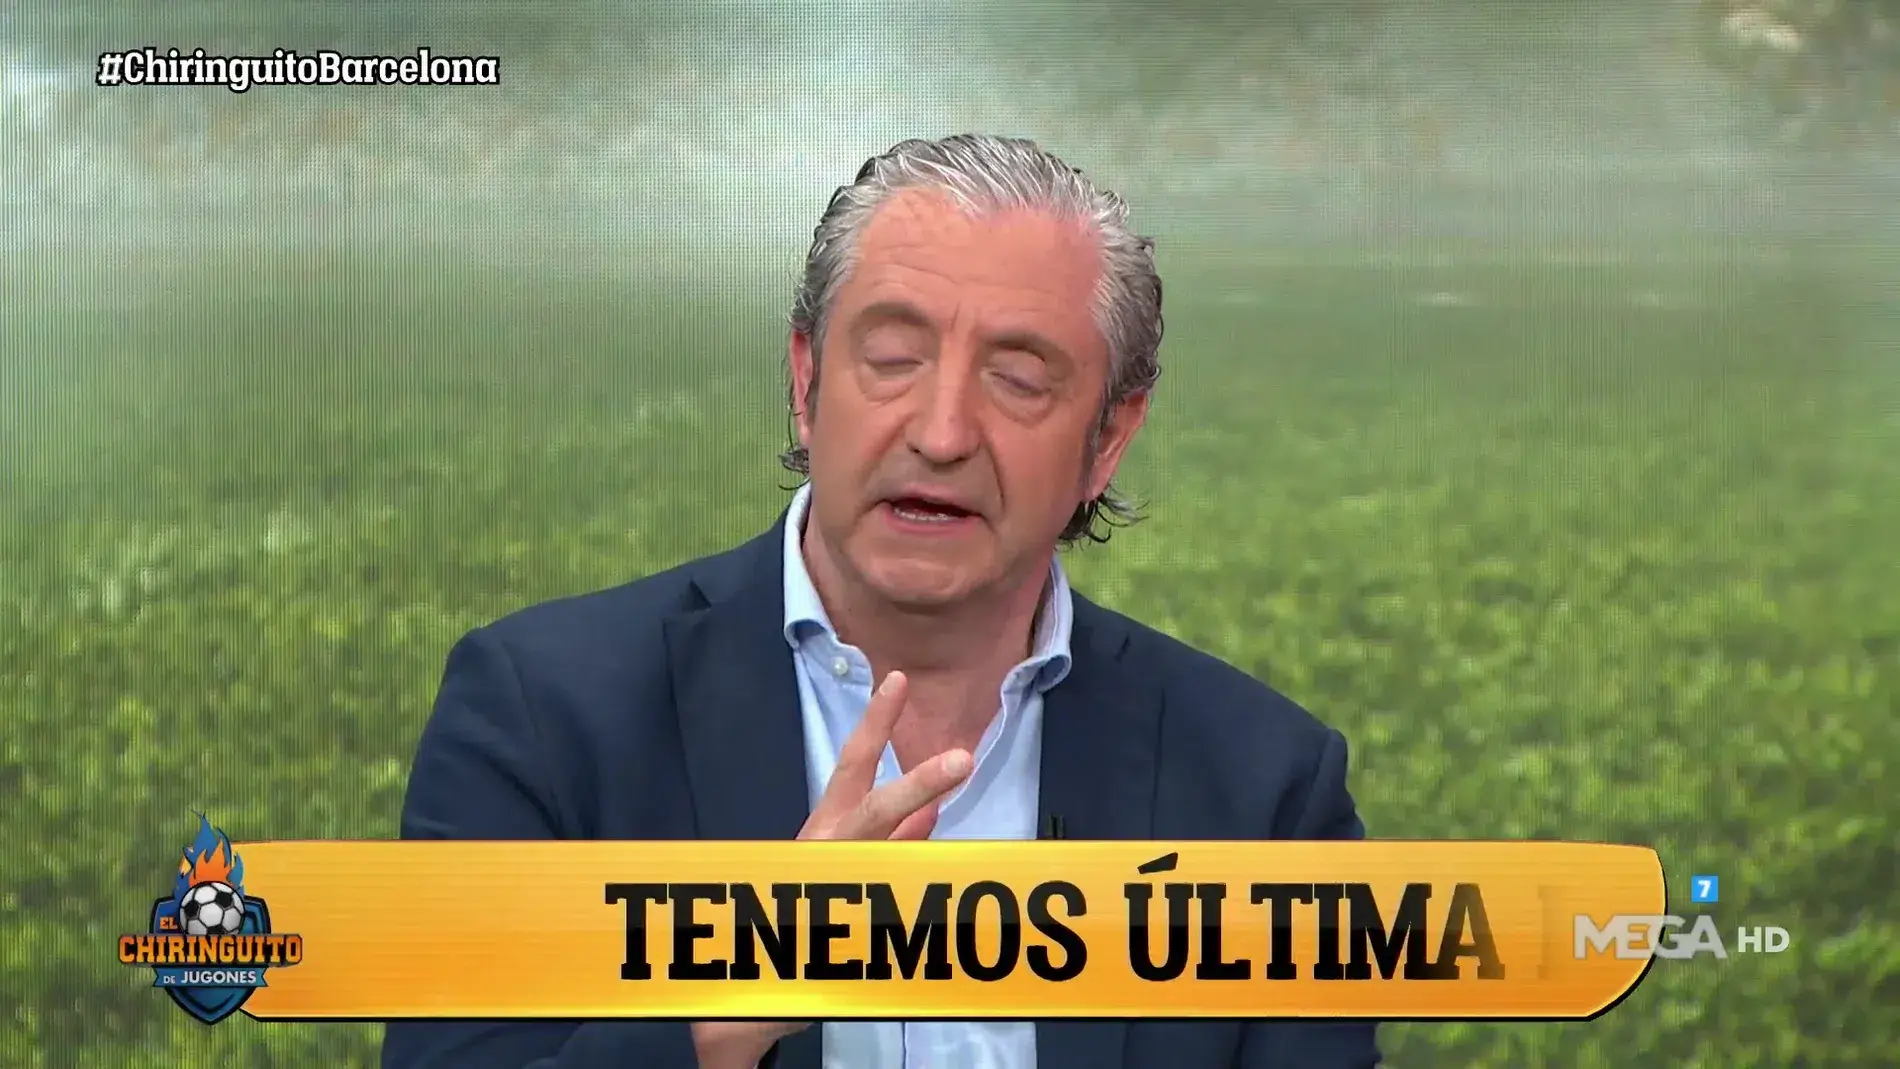 The Chiringuito de Pedrerol turns on the alarms of FC Barcelona: Xavi is in danger
	
